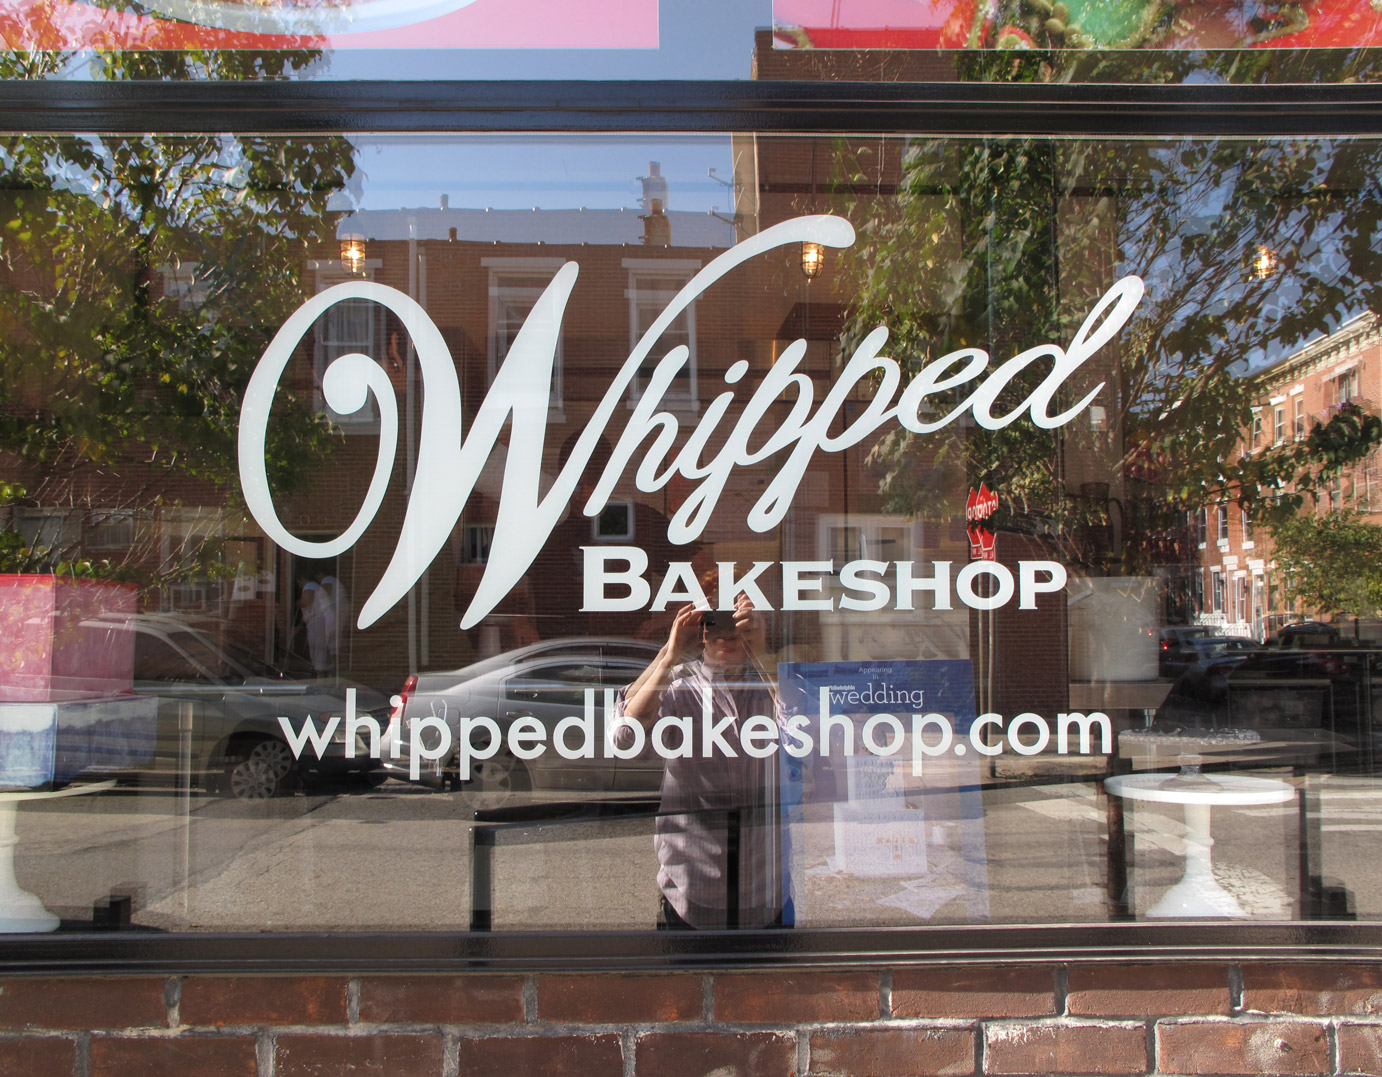 Whipped Bakeshop logo on store window